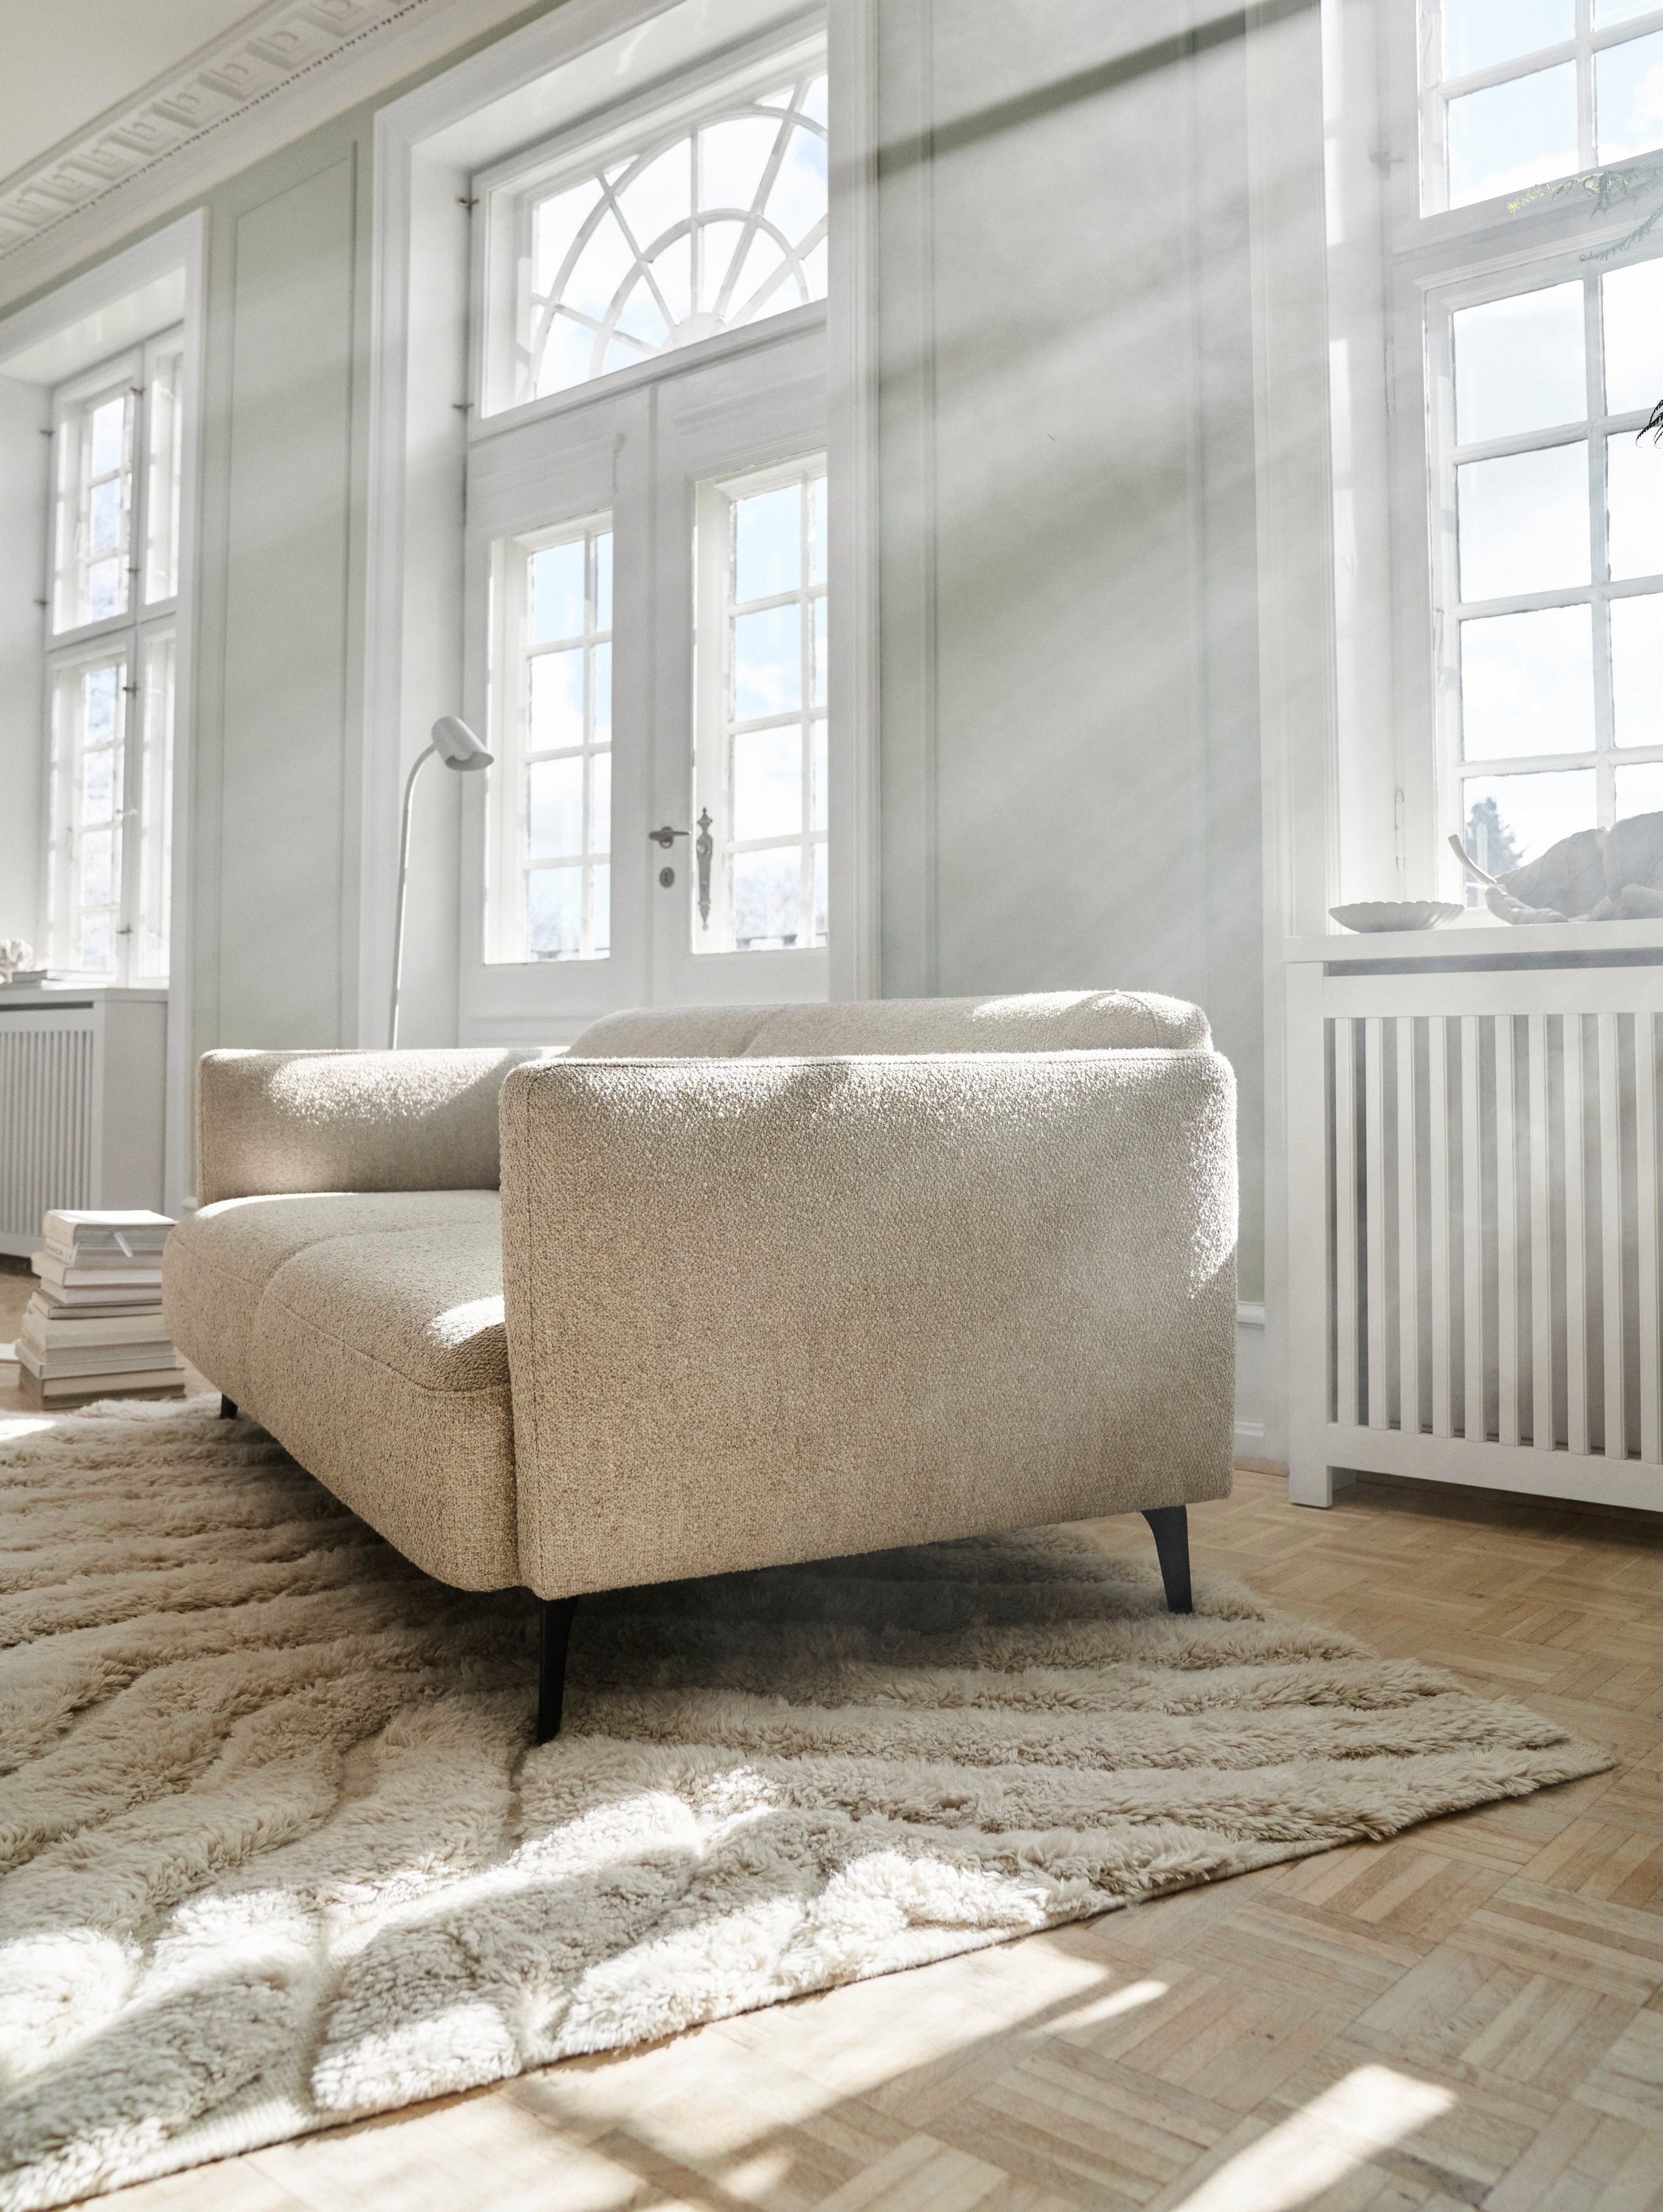 Modena sofa i et fint, solfylt, skandinavisk-inspirert rom.